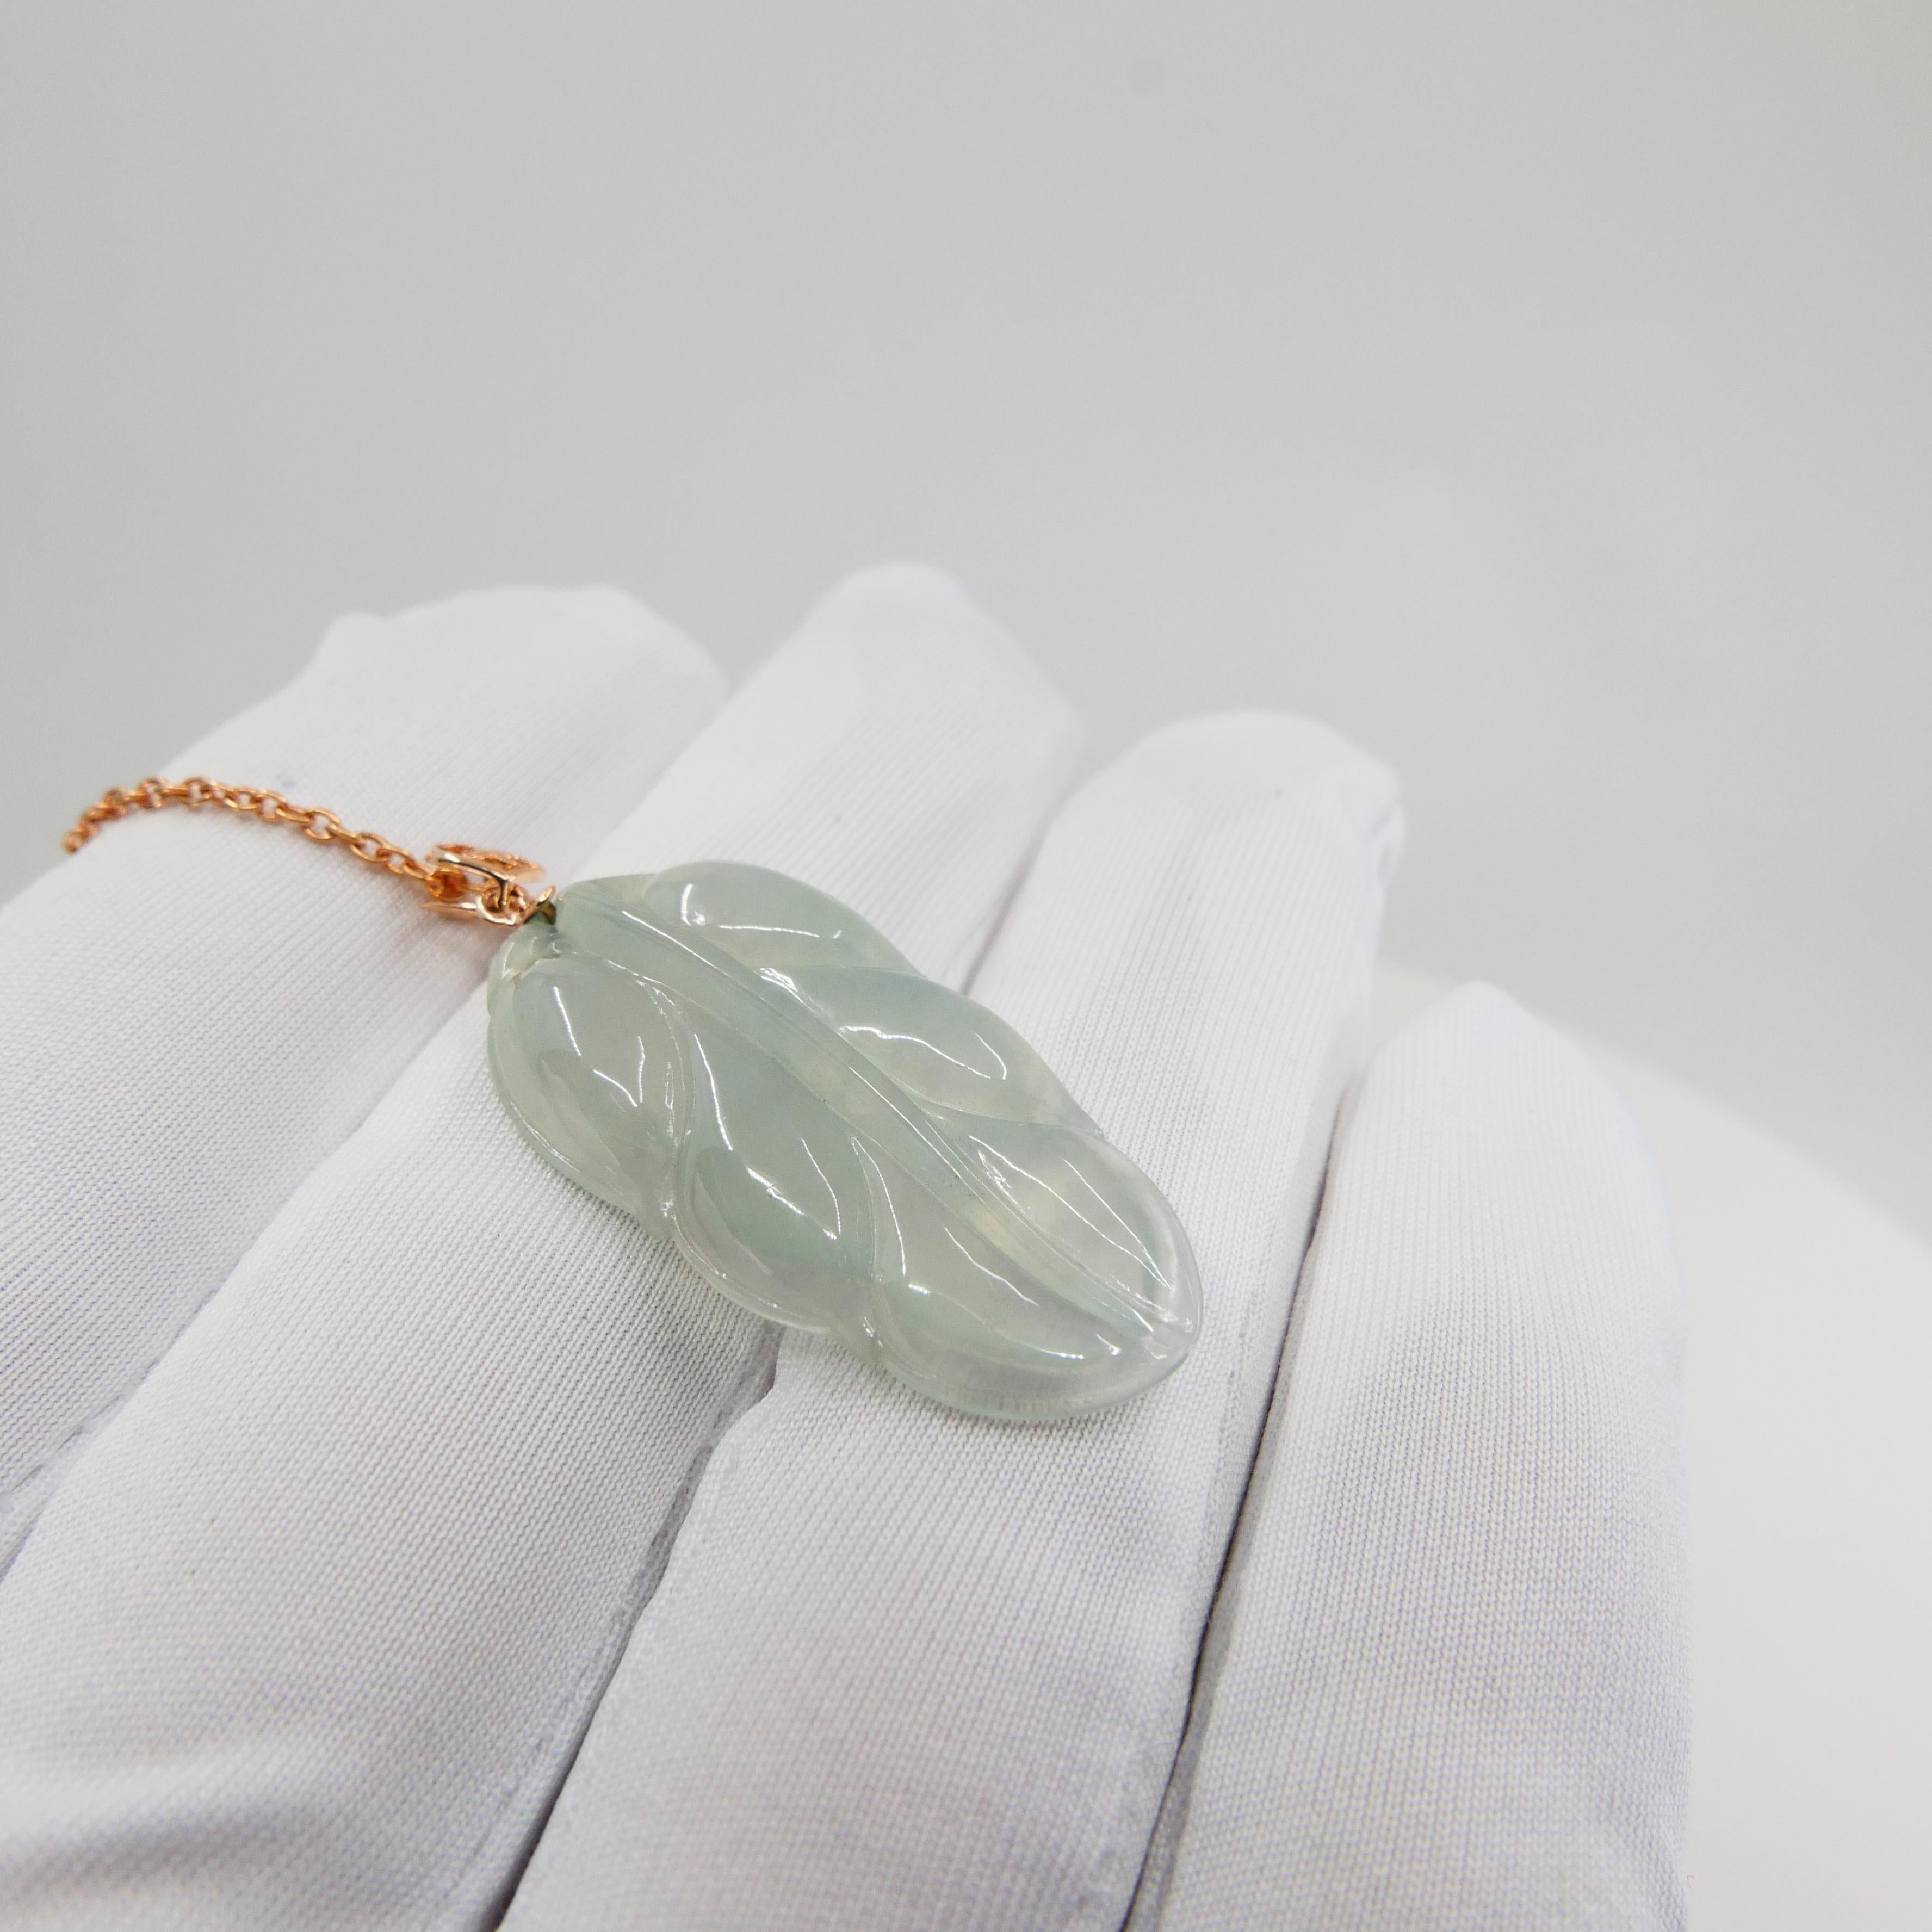 jade leaf pendant meaning